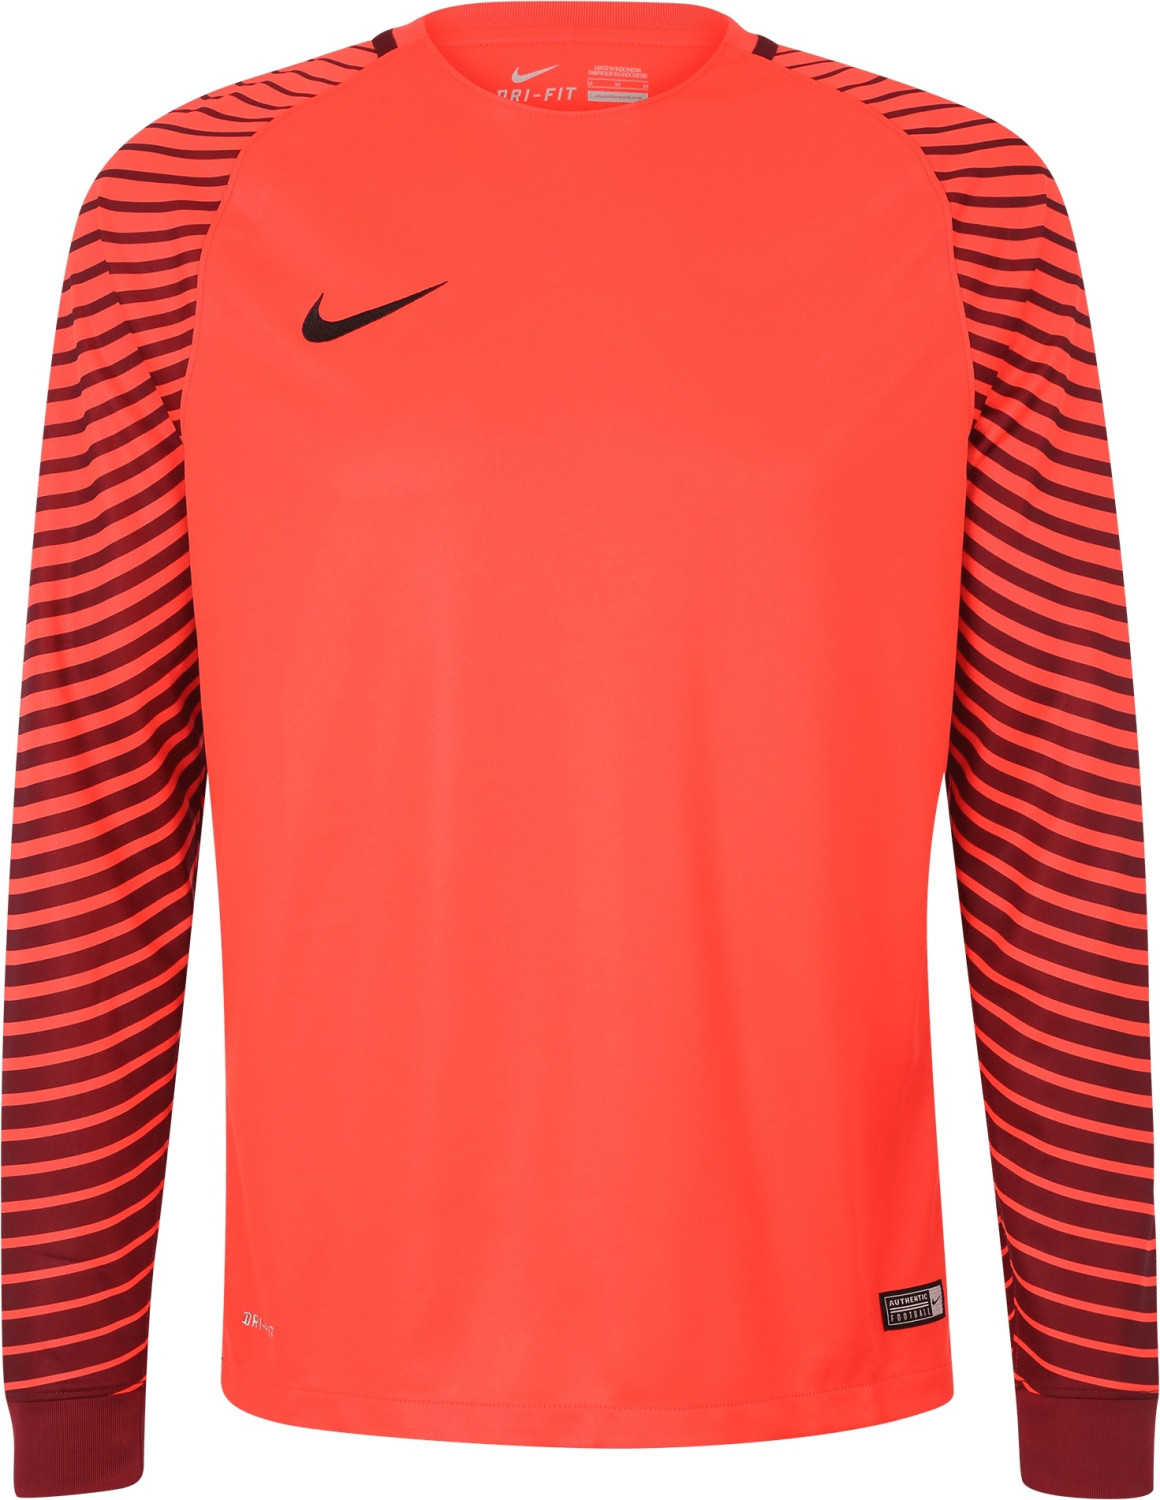 Nike Performance Gardien Goalkeeper Jersey